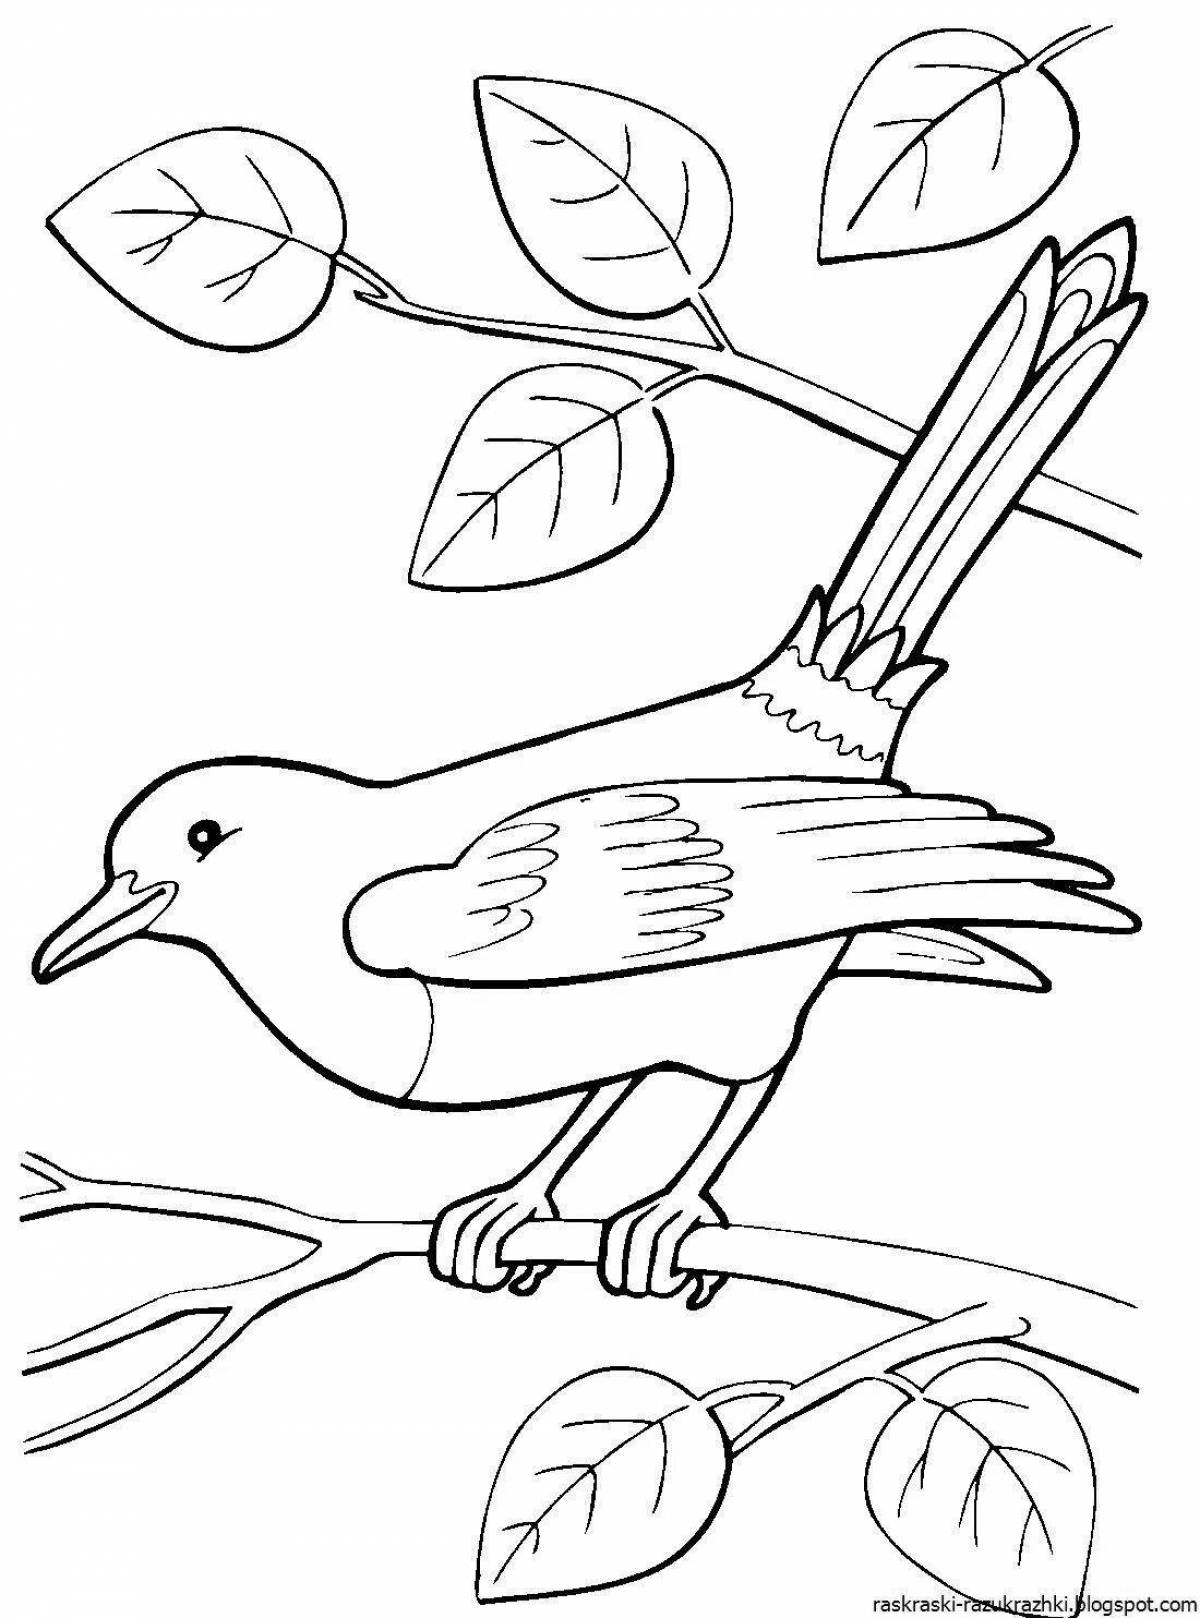 Splendid wintering birds coloring book for children 3-4 years old